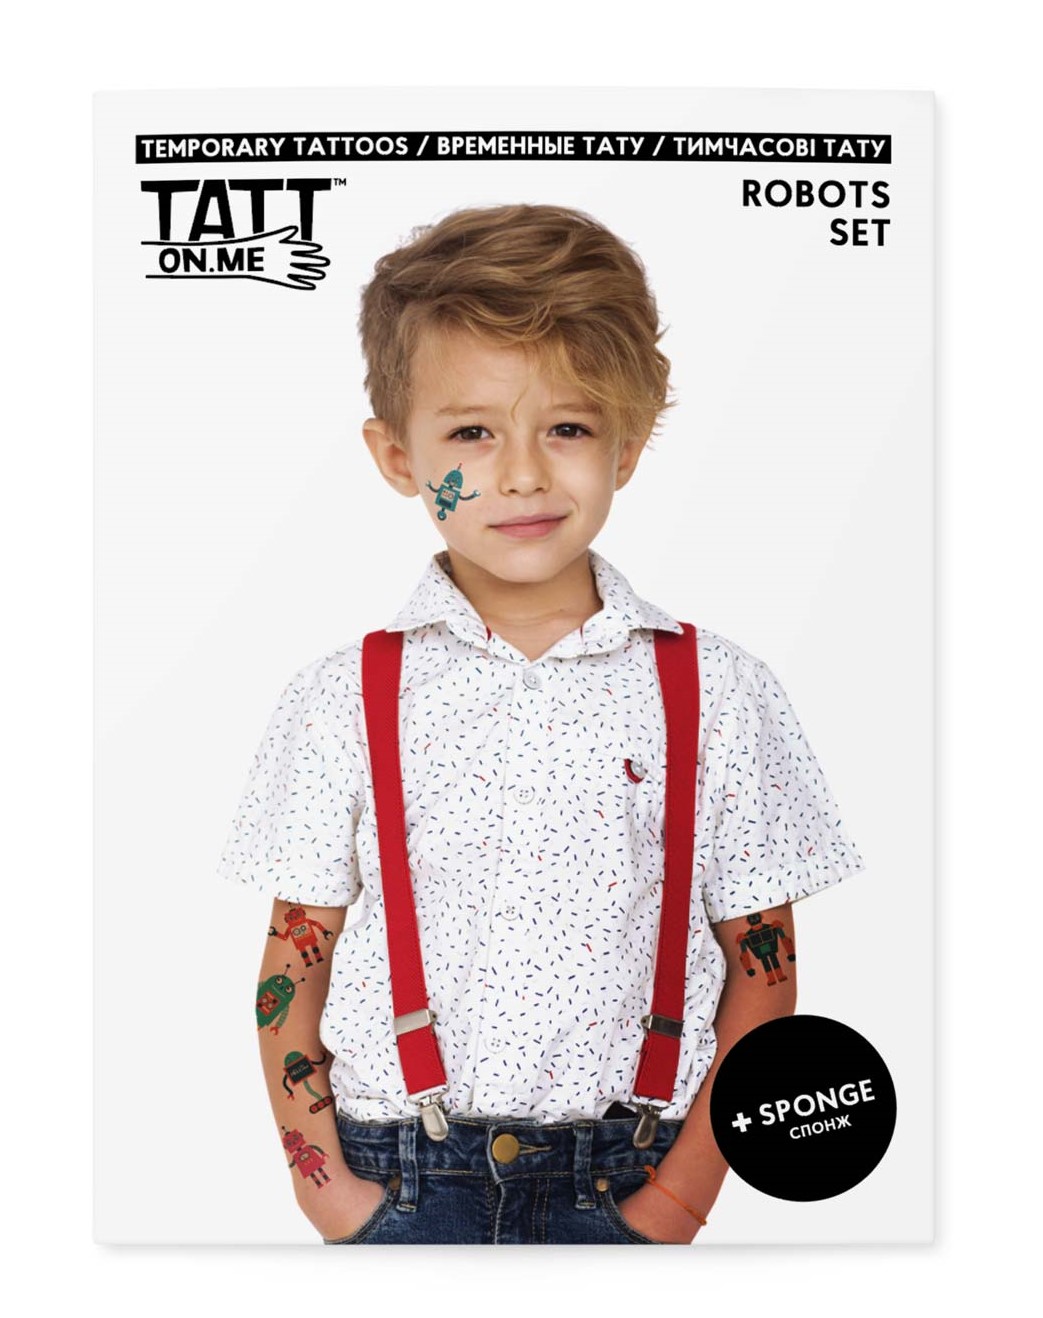 Tatuaje temporare - Robots | Tatton.me